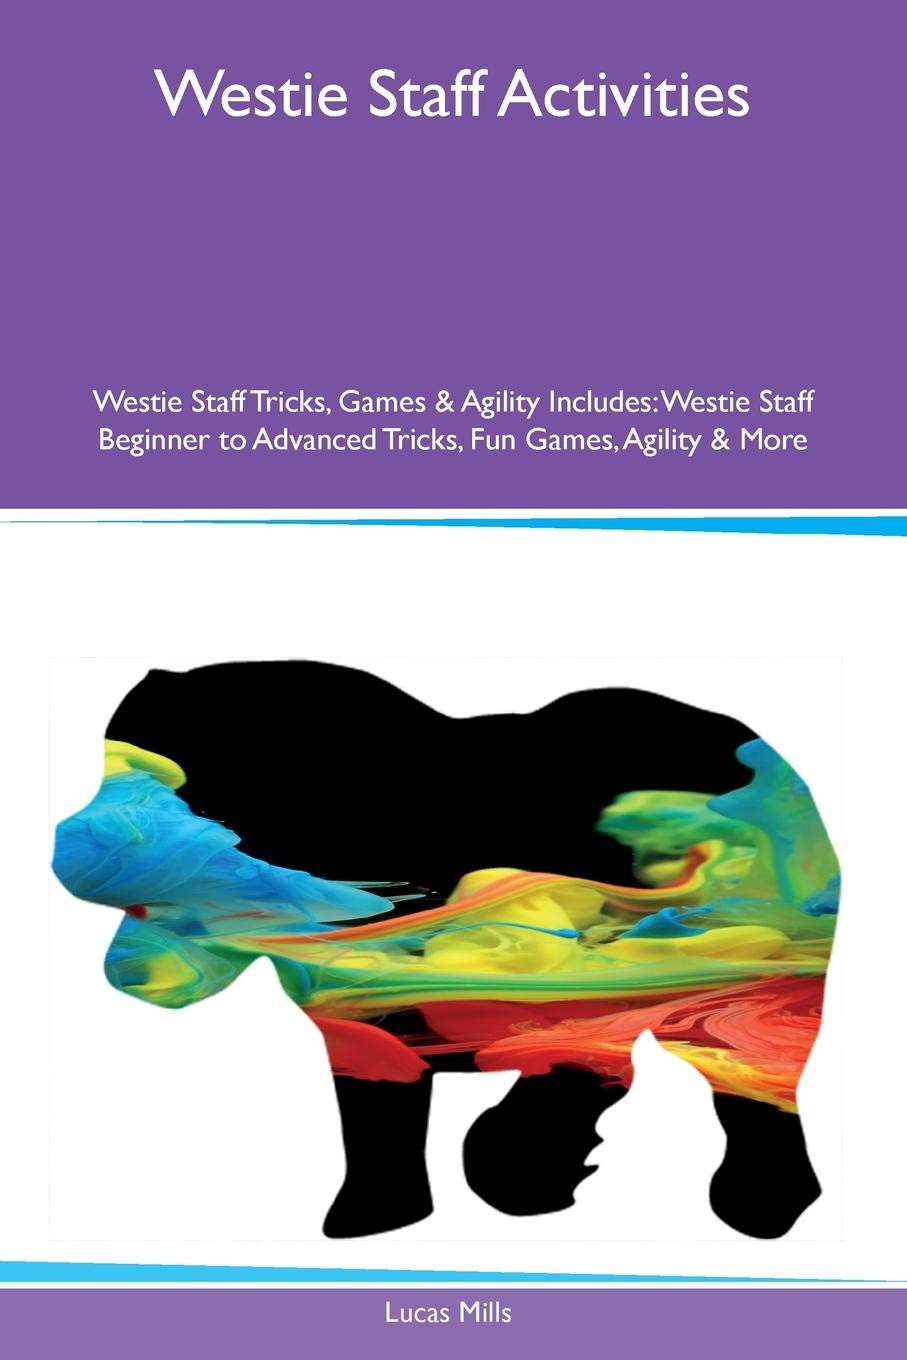 Westie Staff Activities Westie Staff Tricks, Games & Agility Includes. Westie Staff Beginner to Advanced Tricks, Fun Games, Agility & More